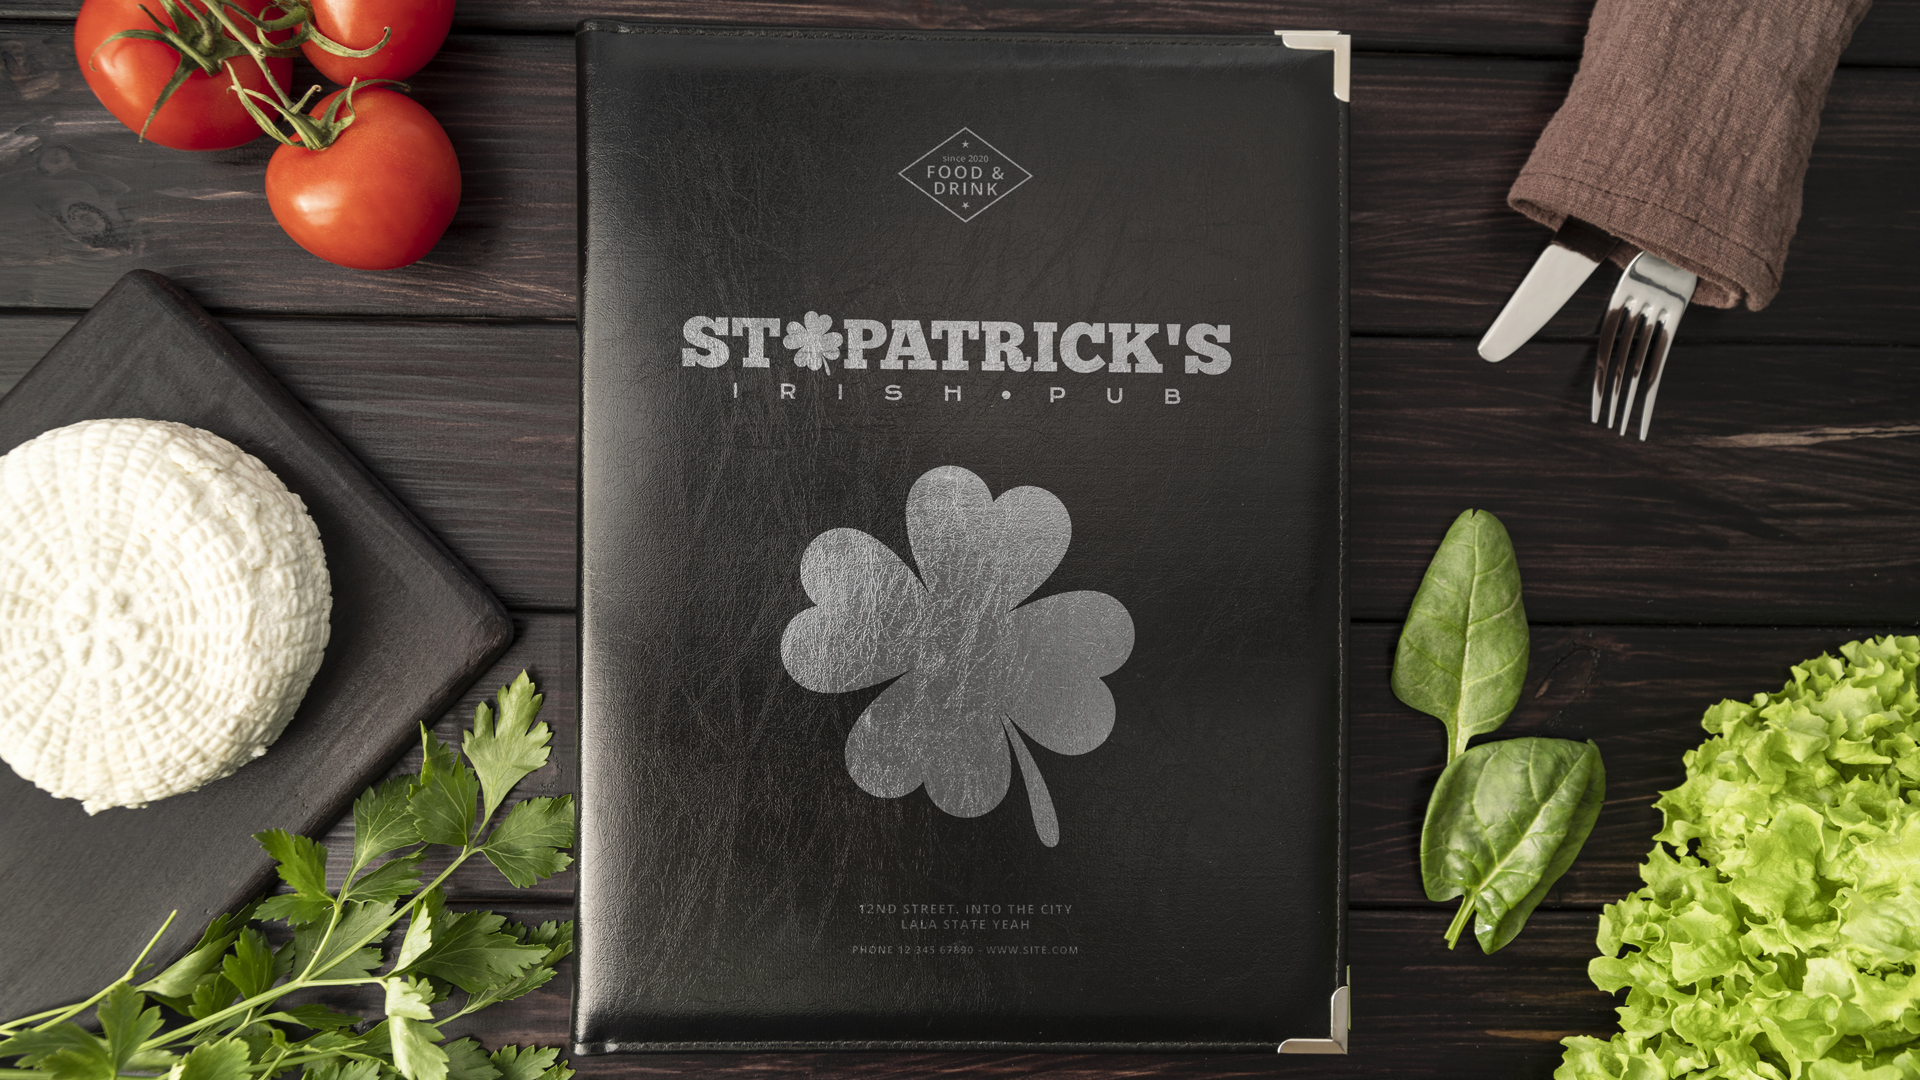 StPatricks-menu